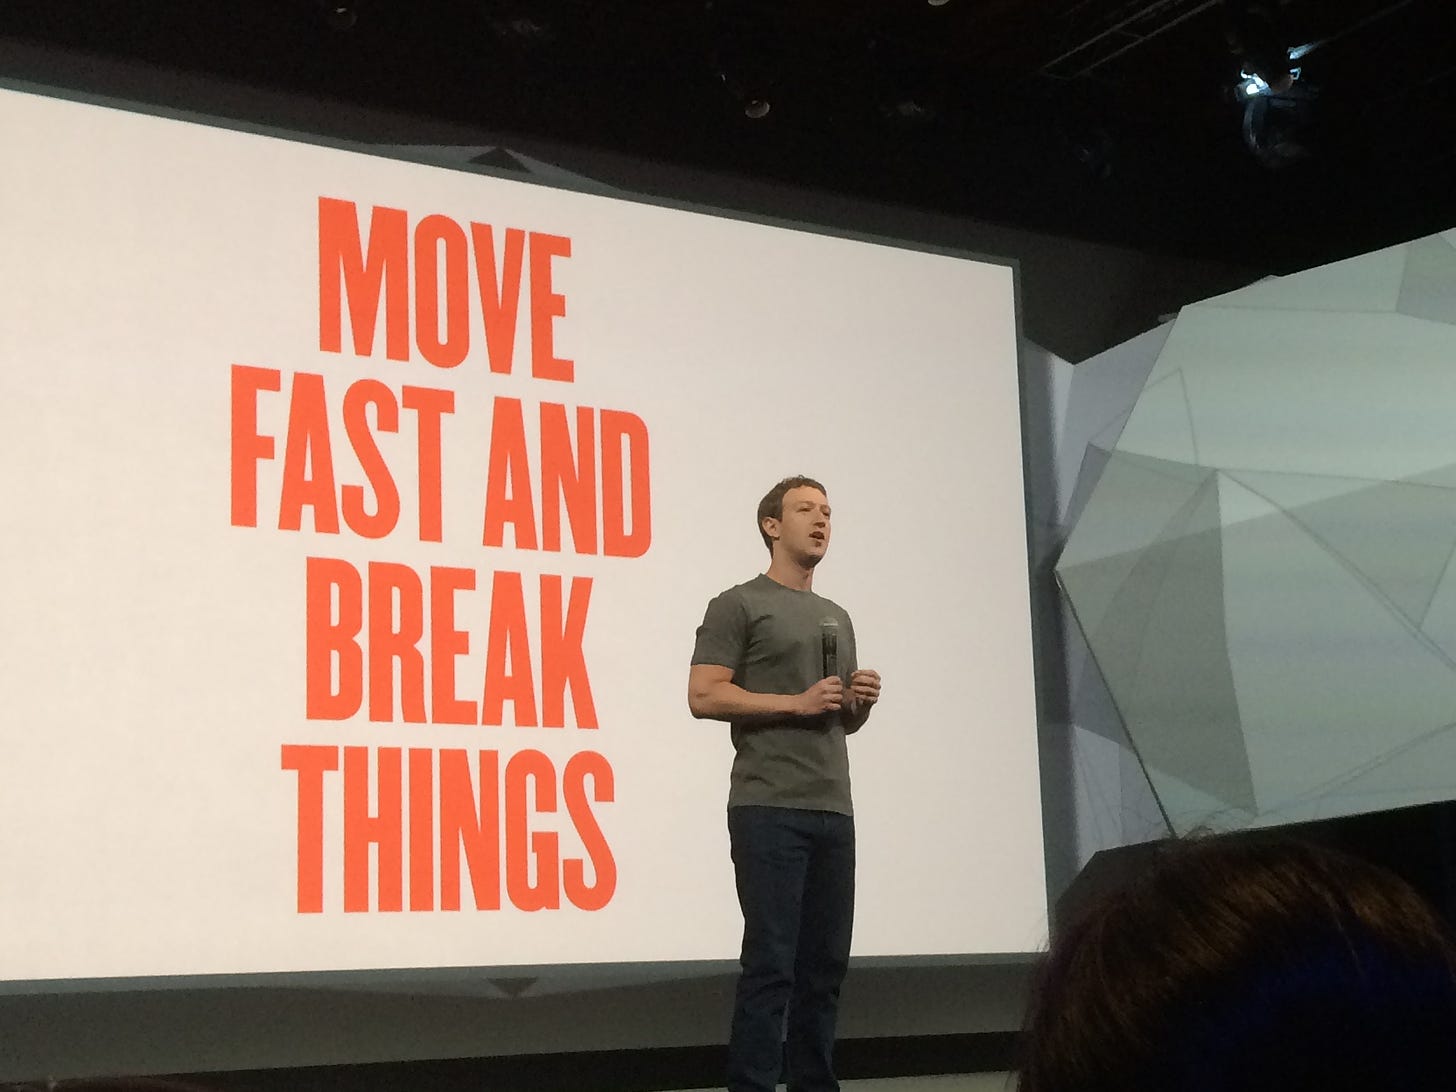 File:Mark Zuckerberg - Move Fast and Break Things.jpg - Wikipedia